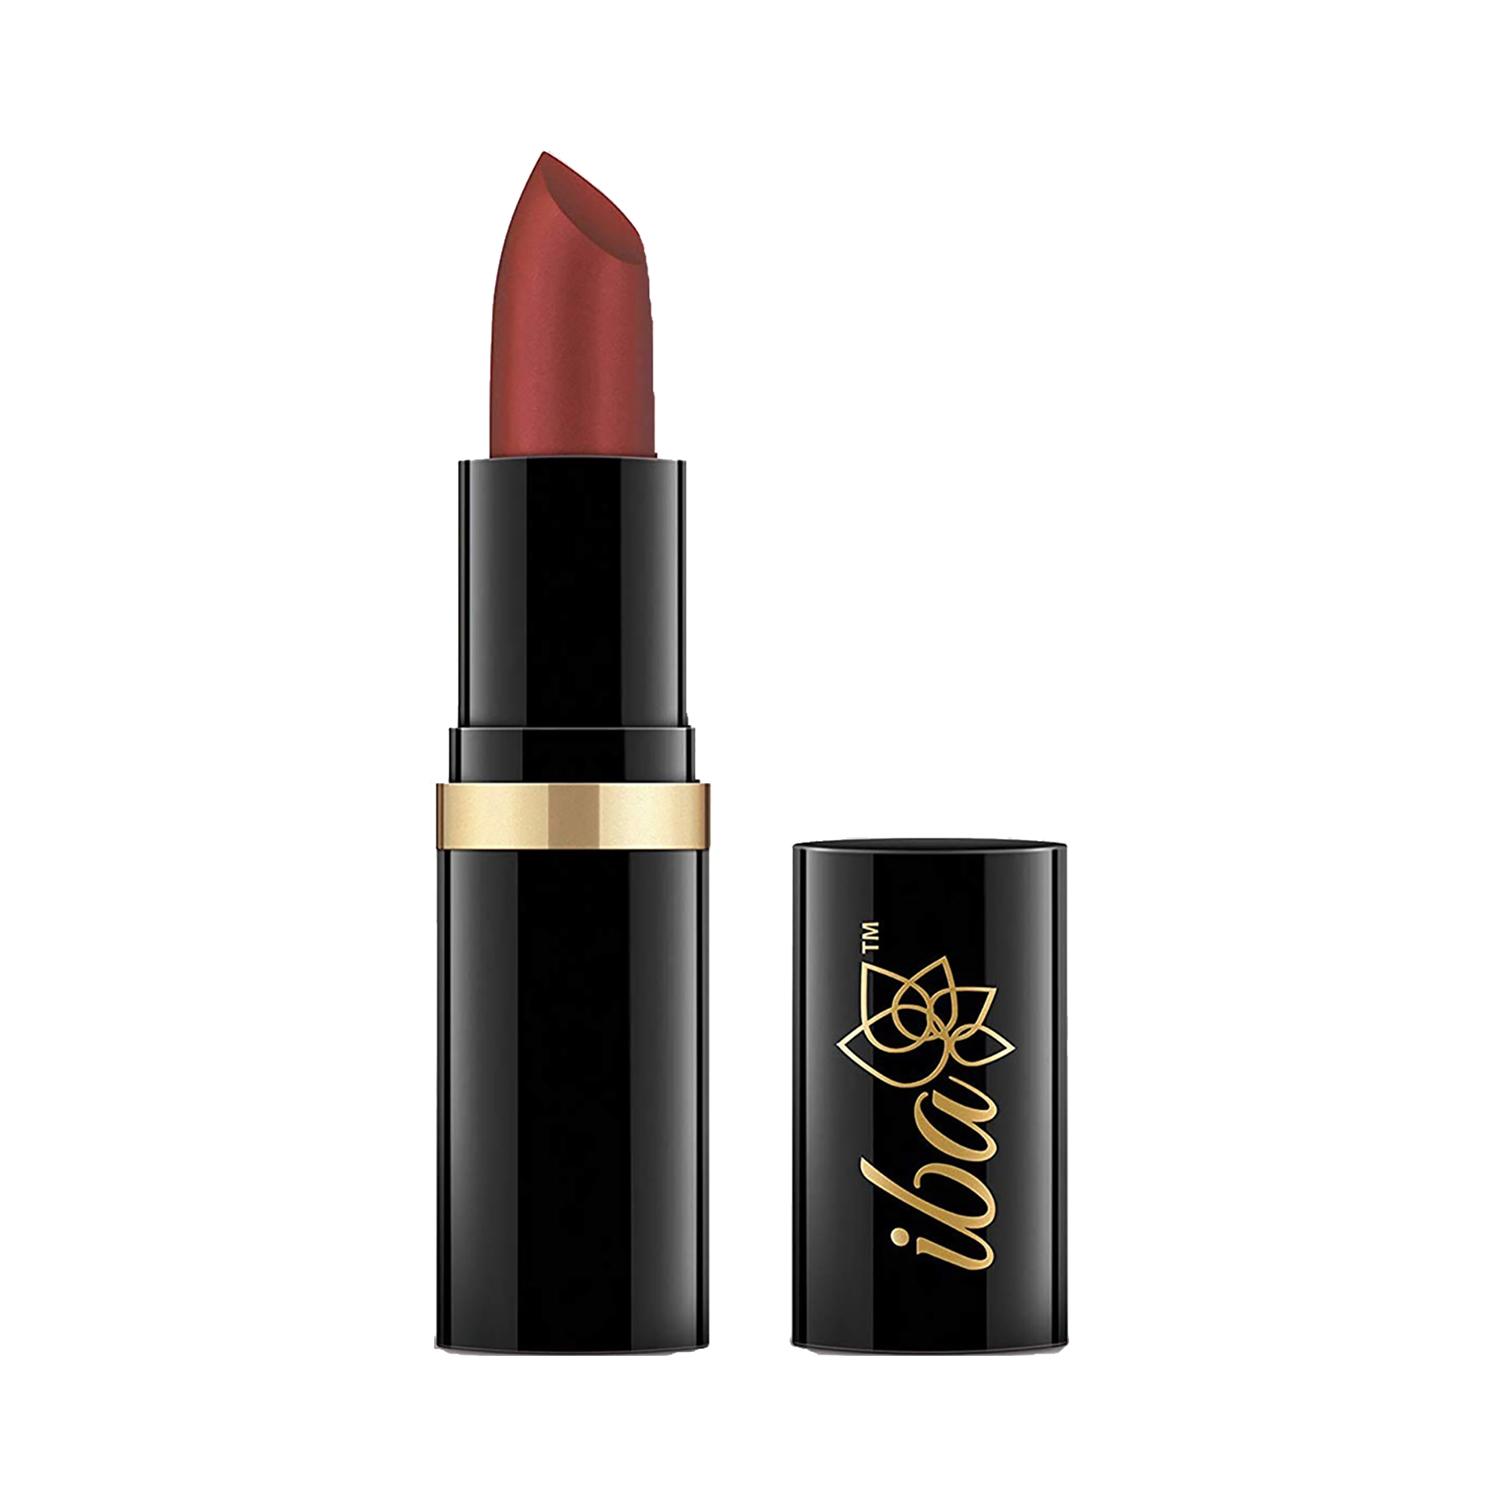 iba pure lips moisture rich lipstick - a90 coral glow (4g)